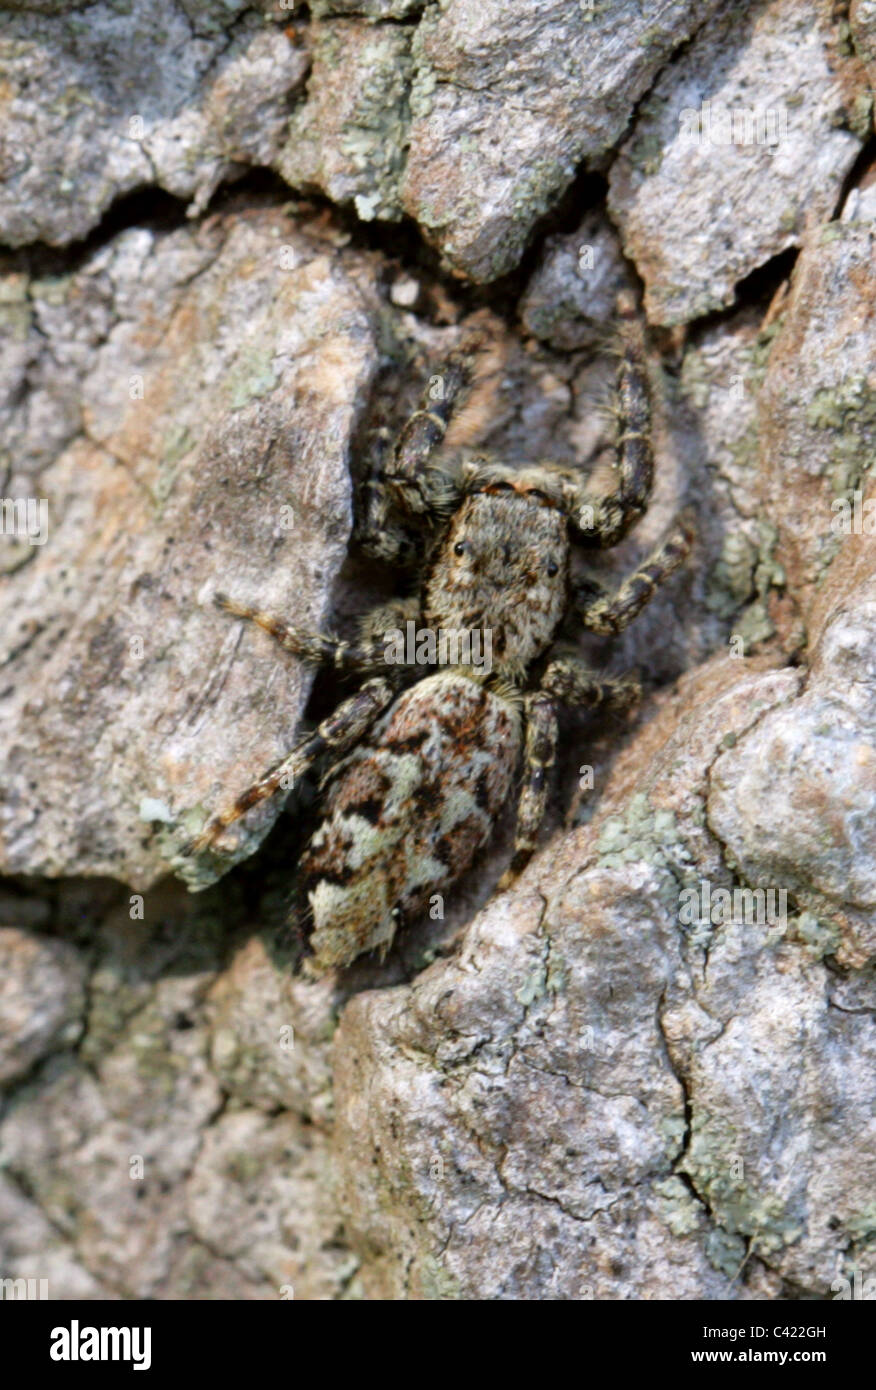 Small Jumping Spider, Marpissa muscosa (?), Salticidae, Araneae, Arachnida. Well Camouflaged Sitting on Poplar Tree Bark. Stock Photo